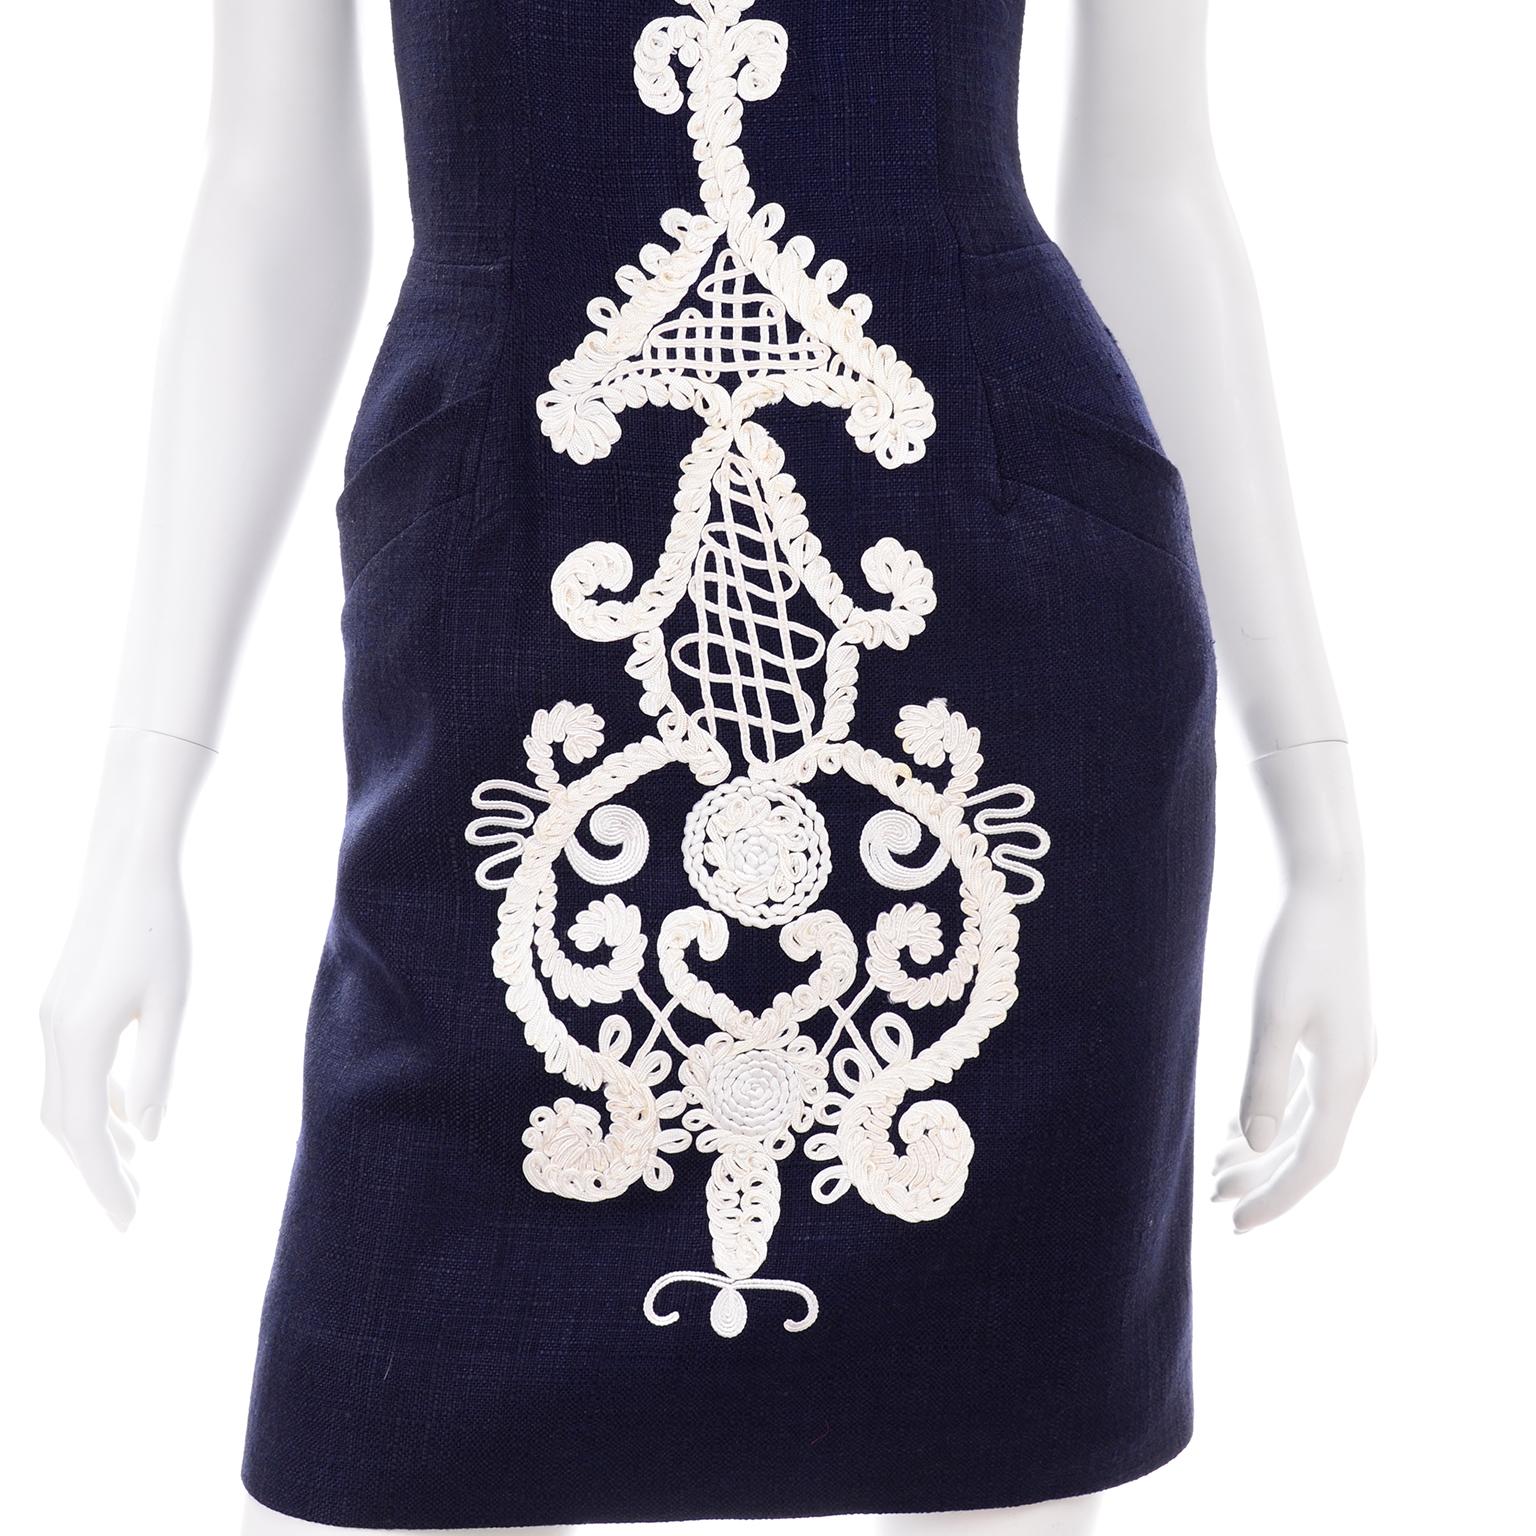 1993 Christian Lacroix Vintage Midnight Blue Dress W/ White Soutache Embroidery For Sale 4